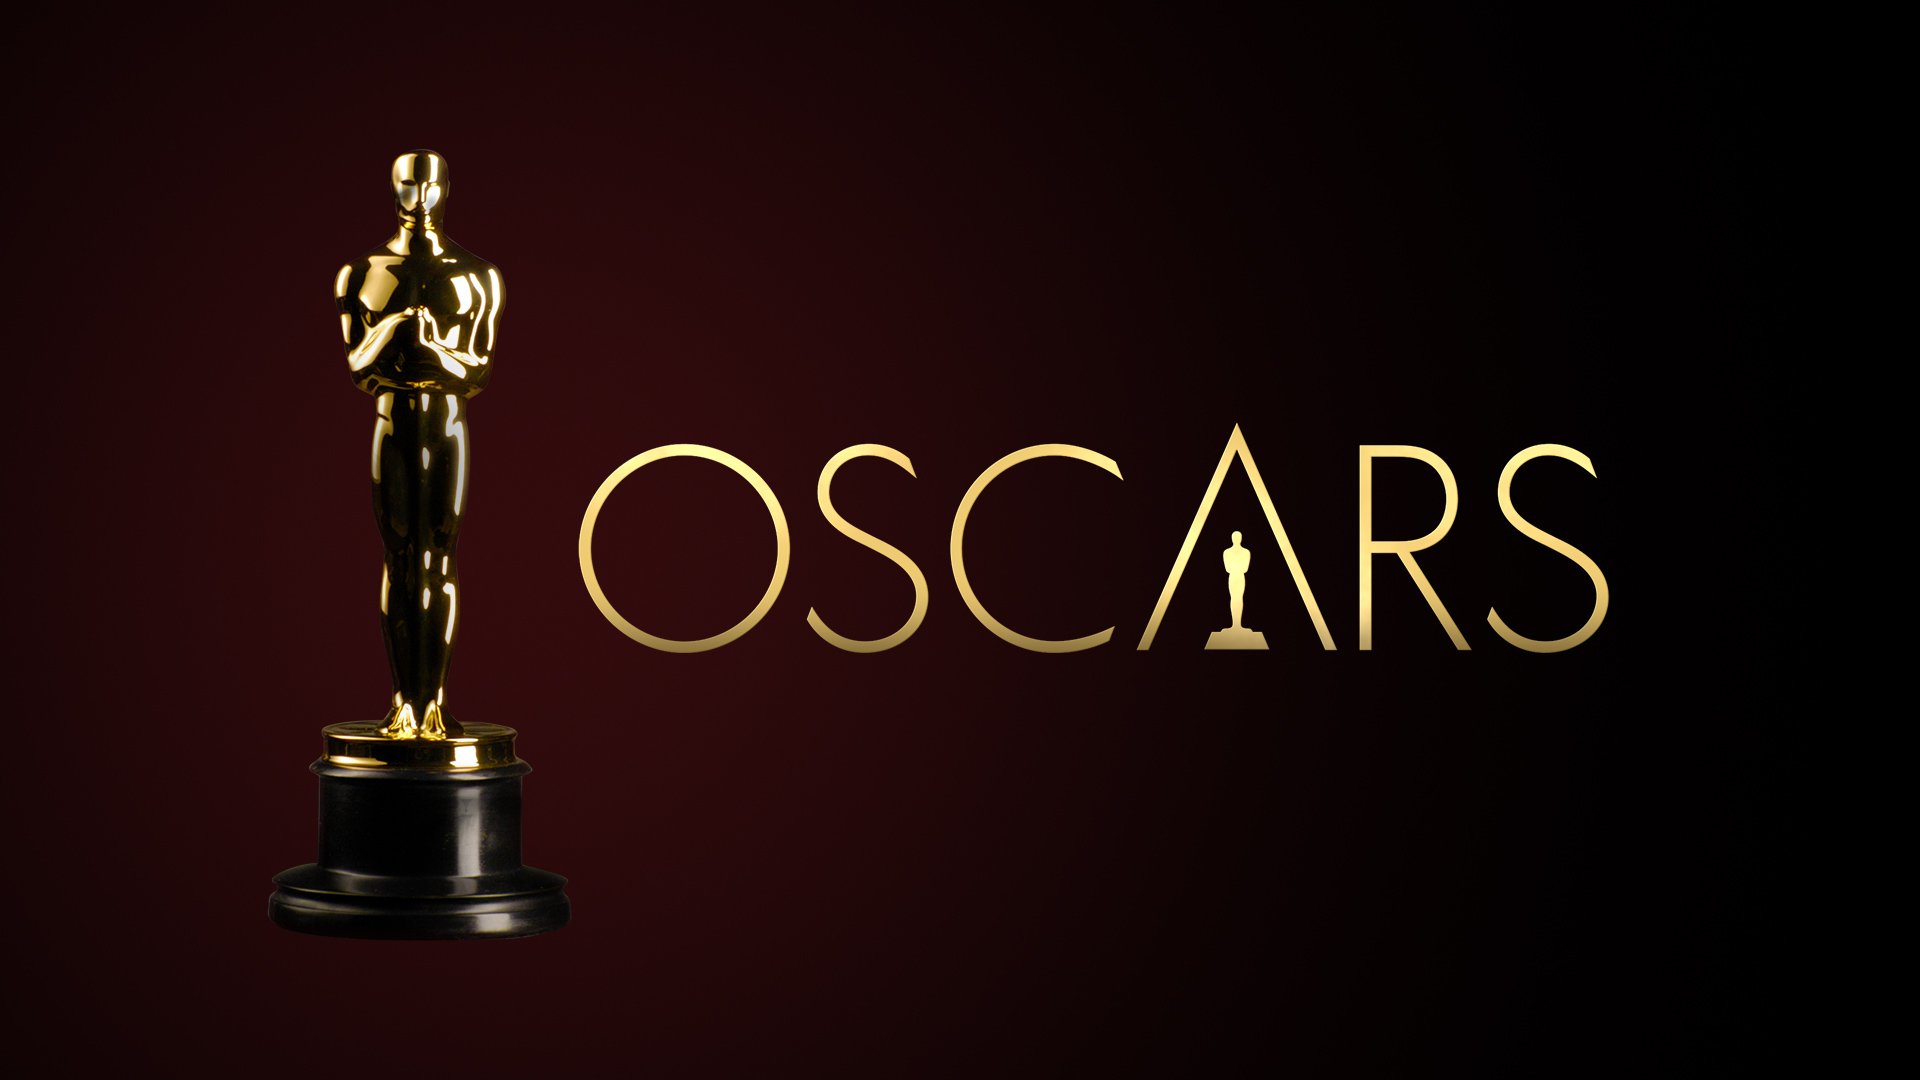 10 Top Rated Oscar Winning Movies To Watch On Netflix - OtakuKart